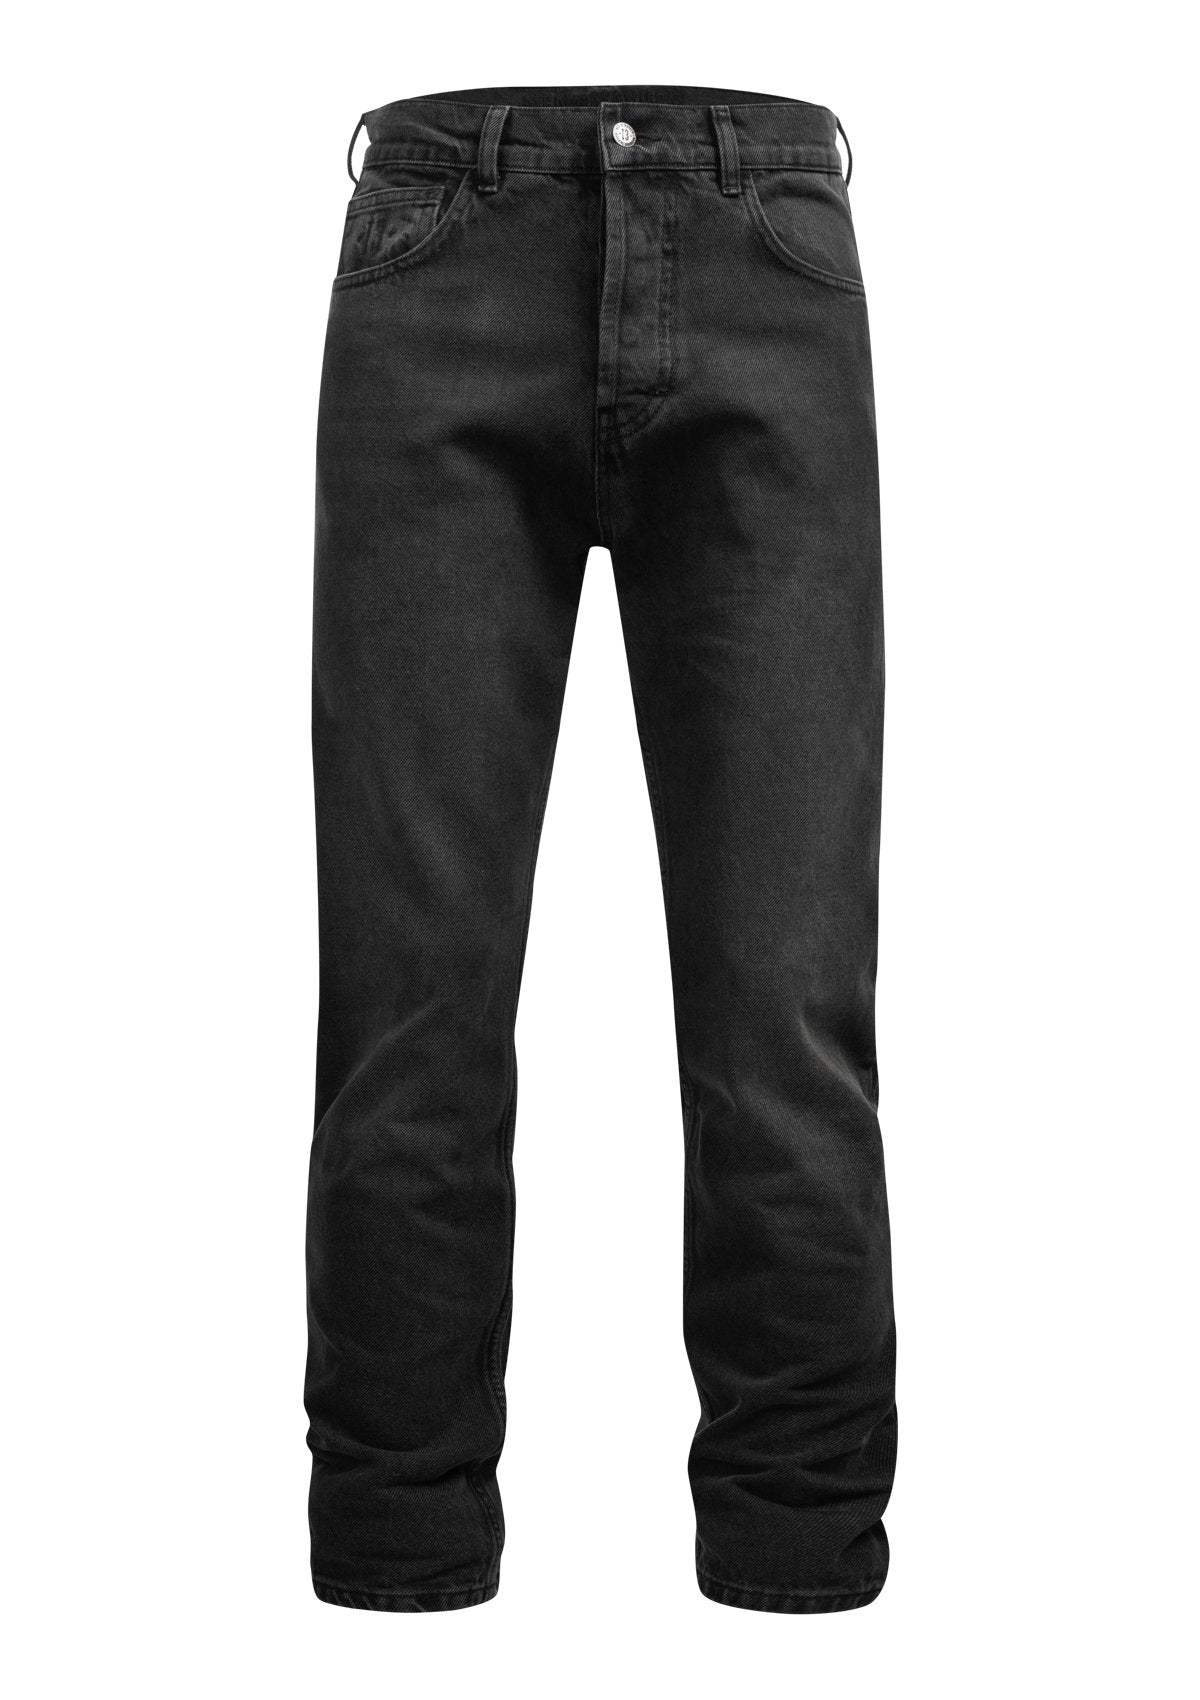 Jeans M13.1 Classic Regular BLKW - MEN OF MAYHEM - ALAIKO-EXCHANGES-MM-M-1120-JH-BLKW - black - Herren